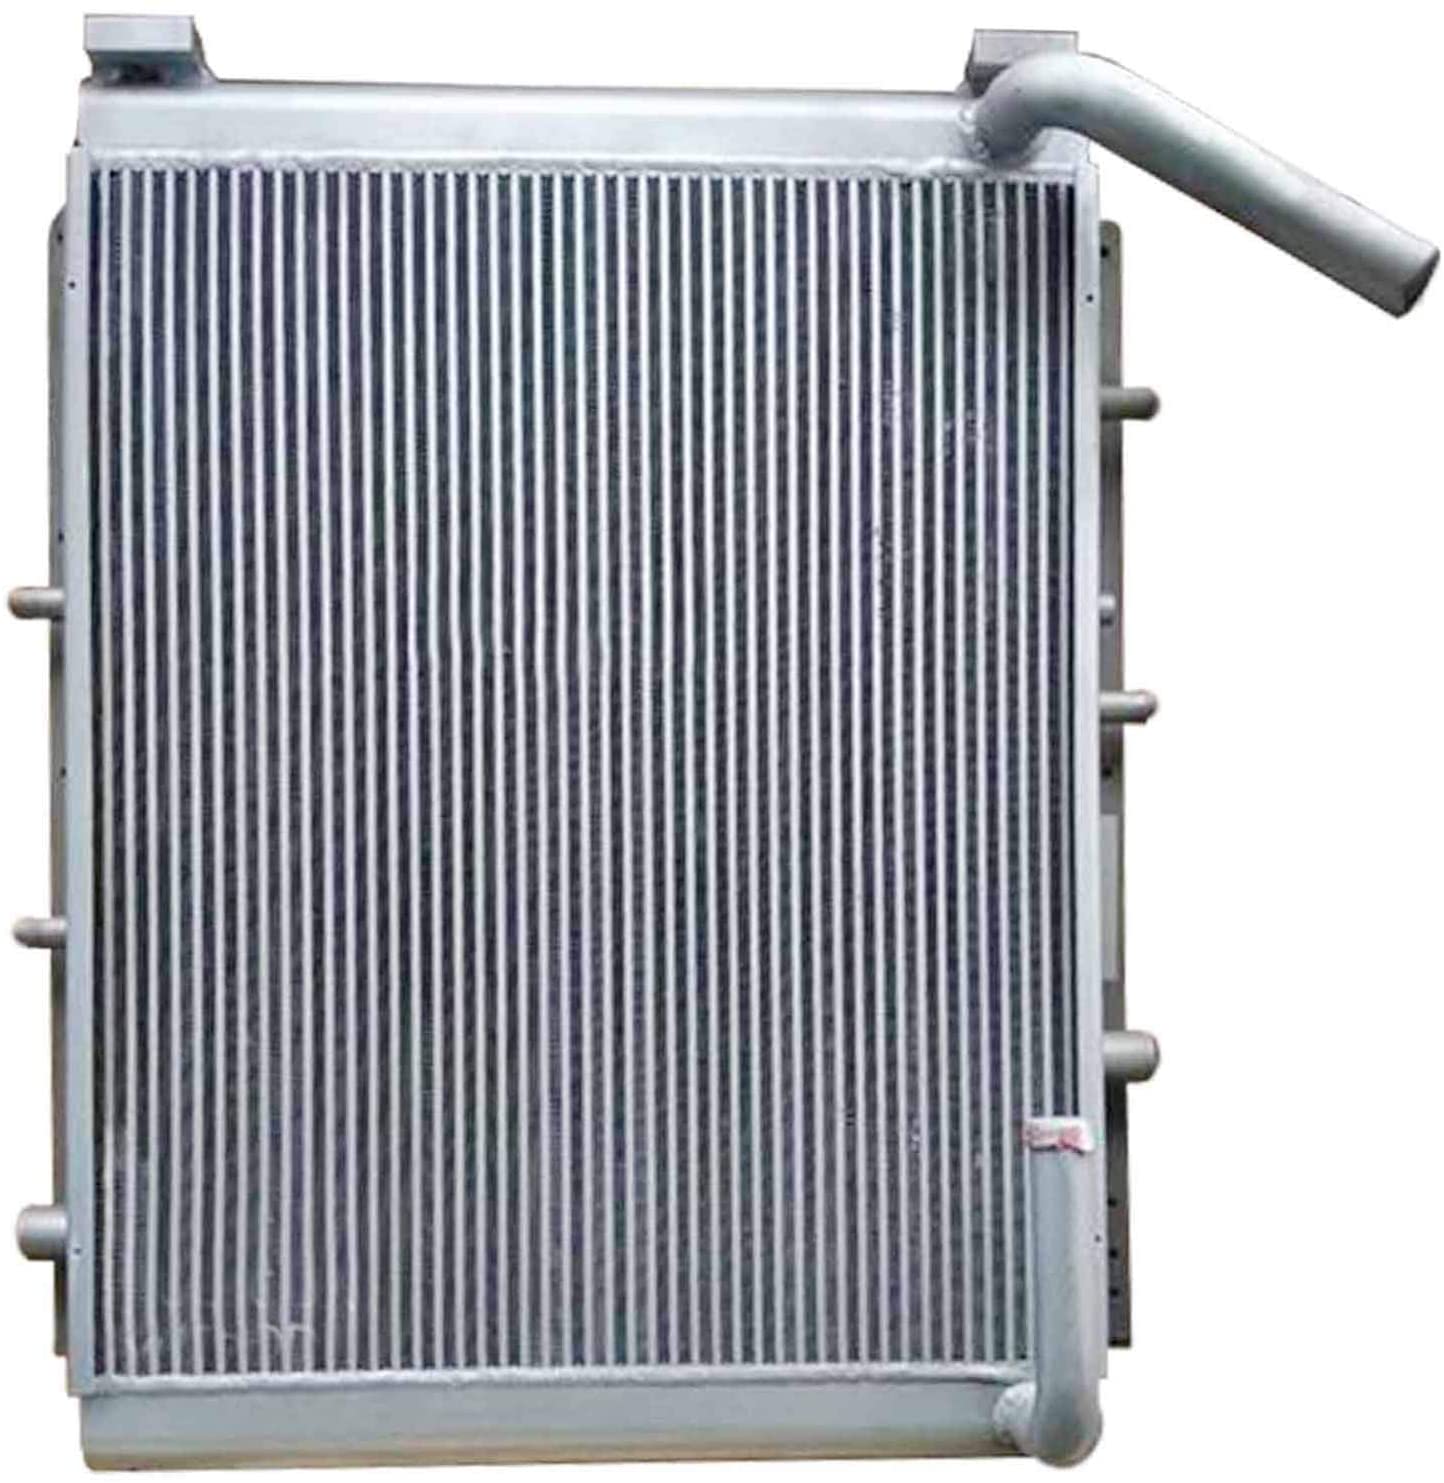 Hydraulic Oil Cooler Radiator 4286106 AT155356 for Hitachi EX220-2 EX220-3 EX220LC-2 EX220LC-3 Excavator John Deere 790ELC Excavator - KUDUPARTS